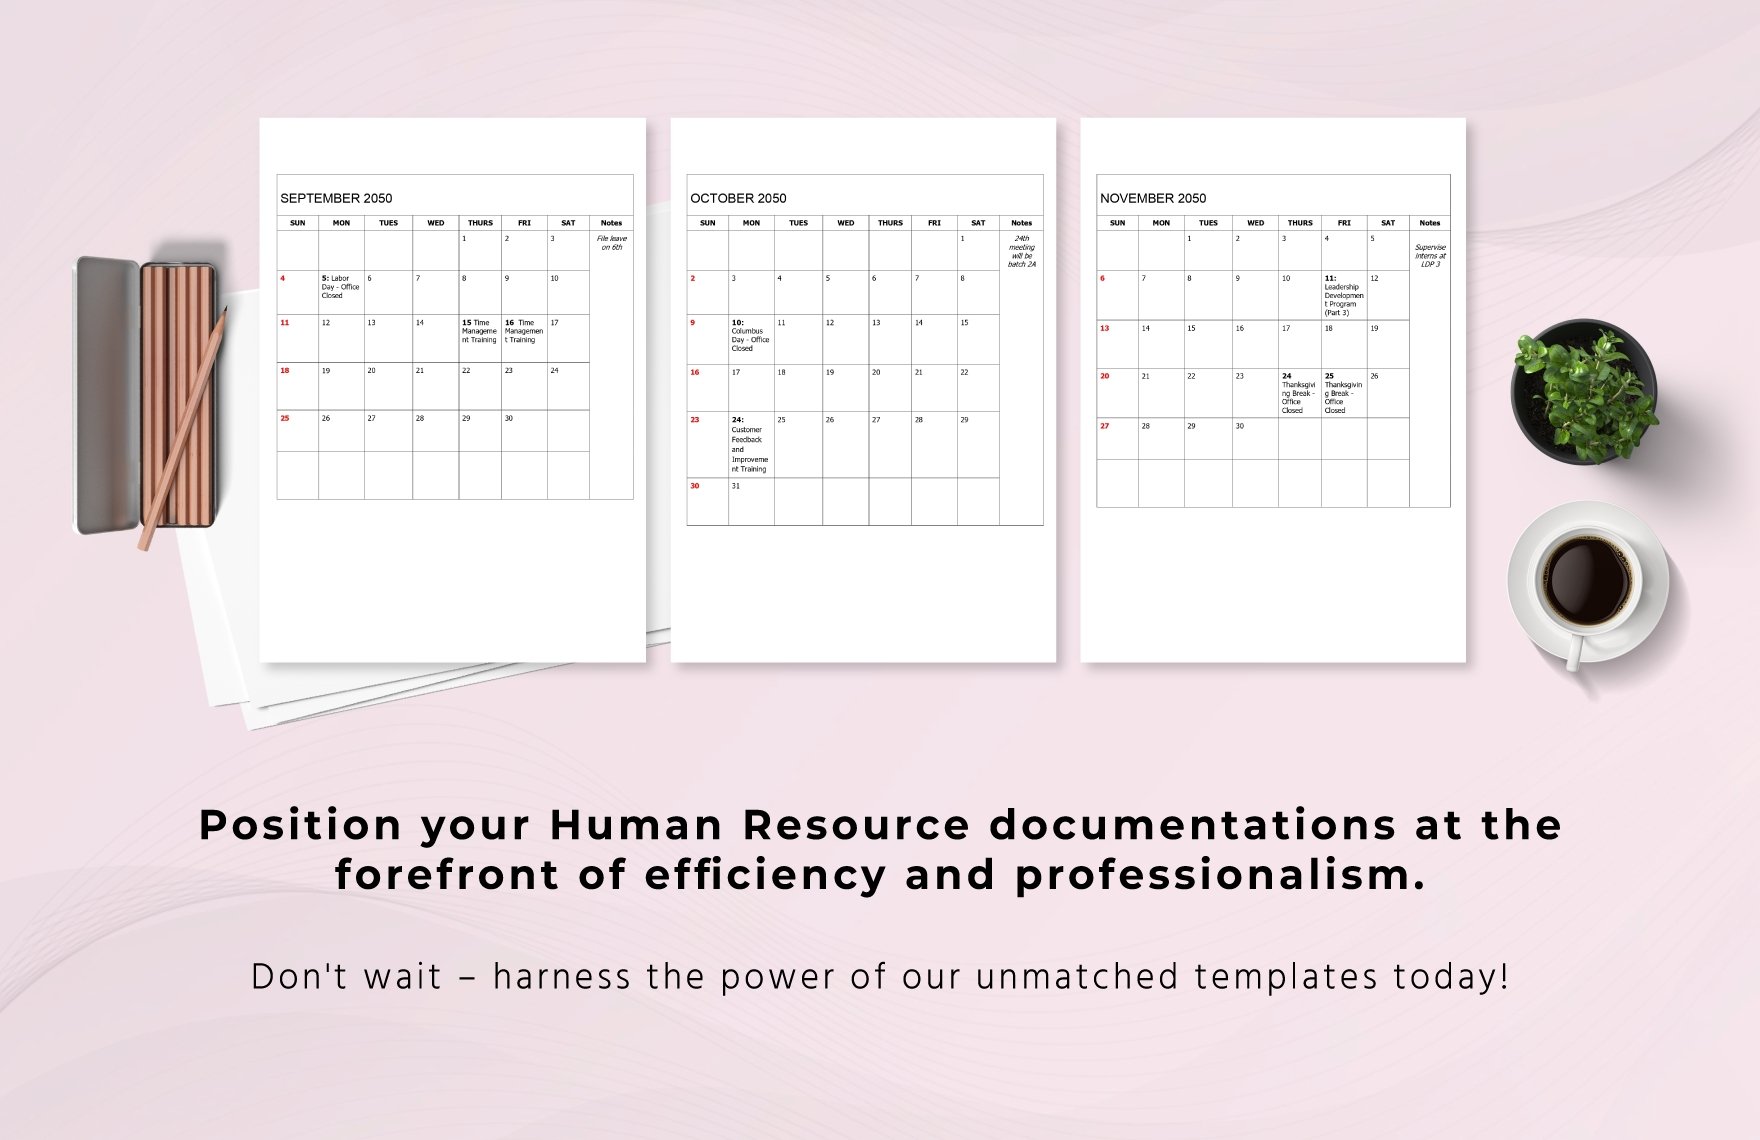 Training Schedule & Calendar Yearly Plan HR Template